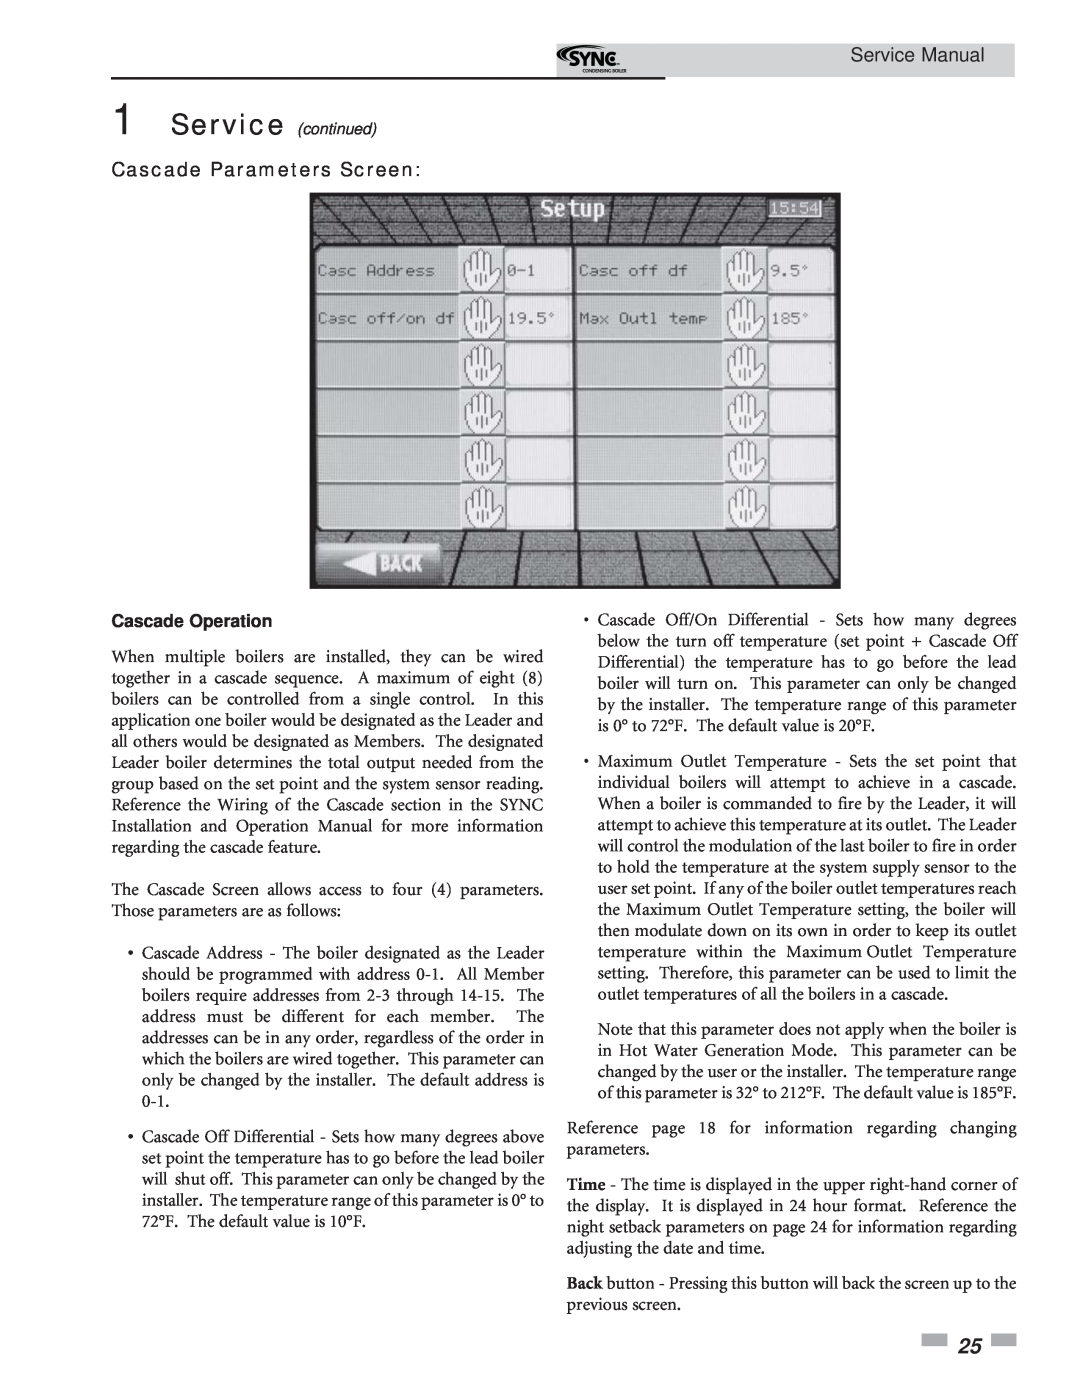 Lochinvar 1.3 service manual Cascade Parameters Screen, Service Manual, Cascade Operation 